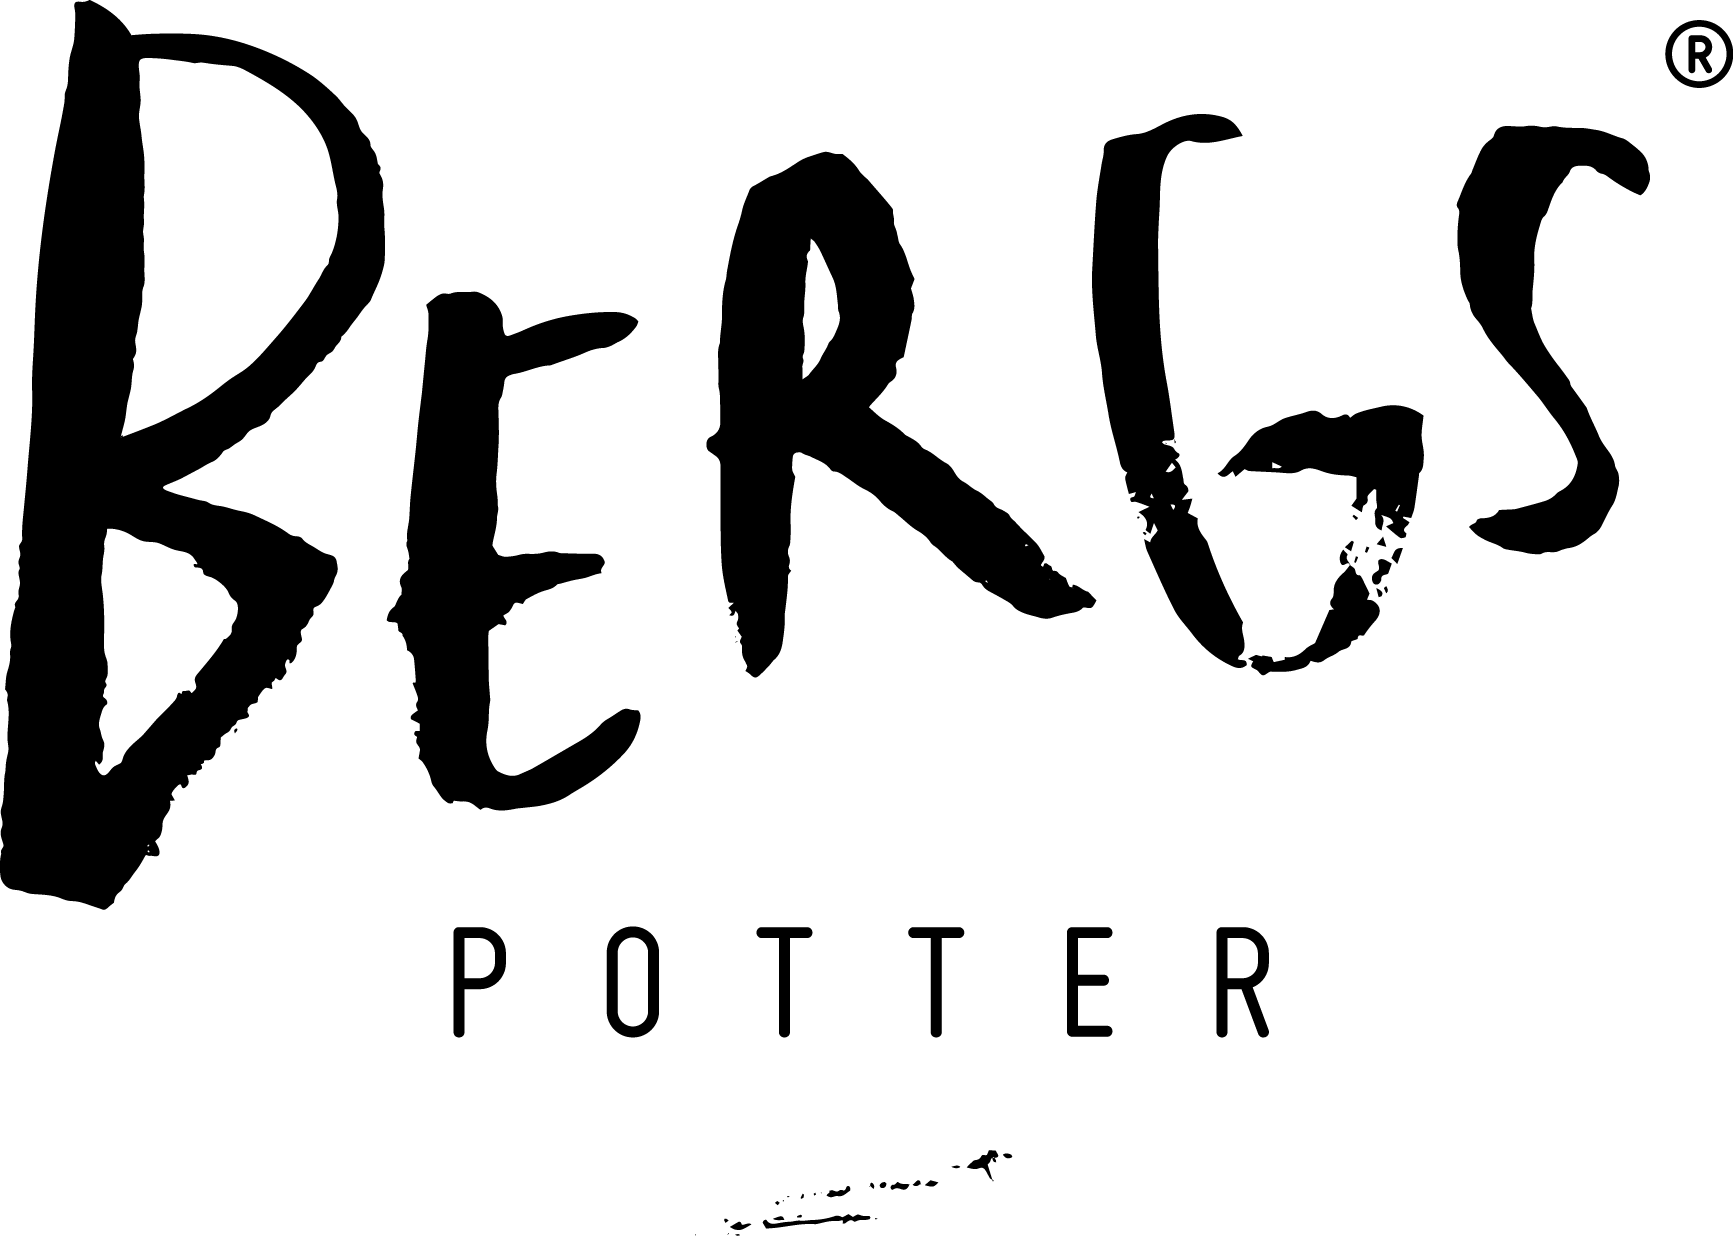 bergs potter logo